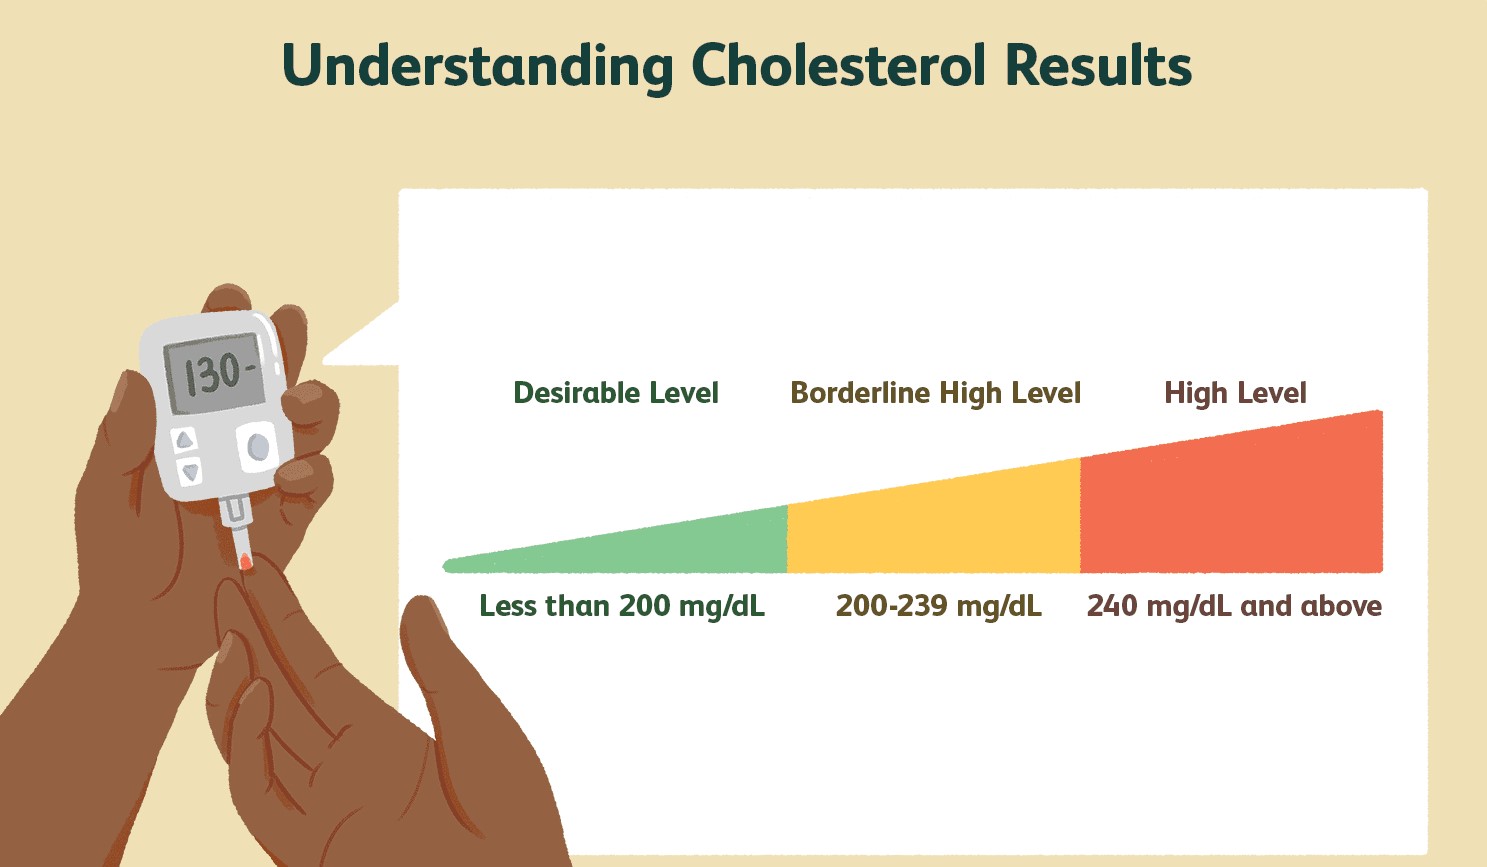 Cholesterol can harm health